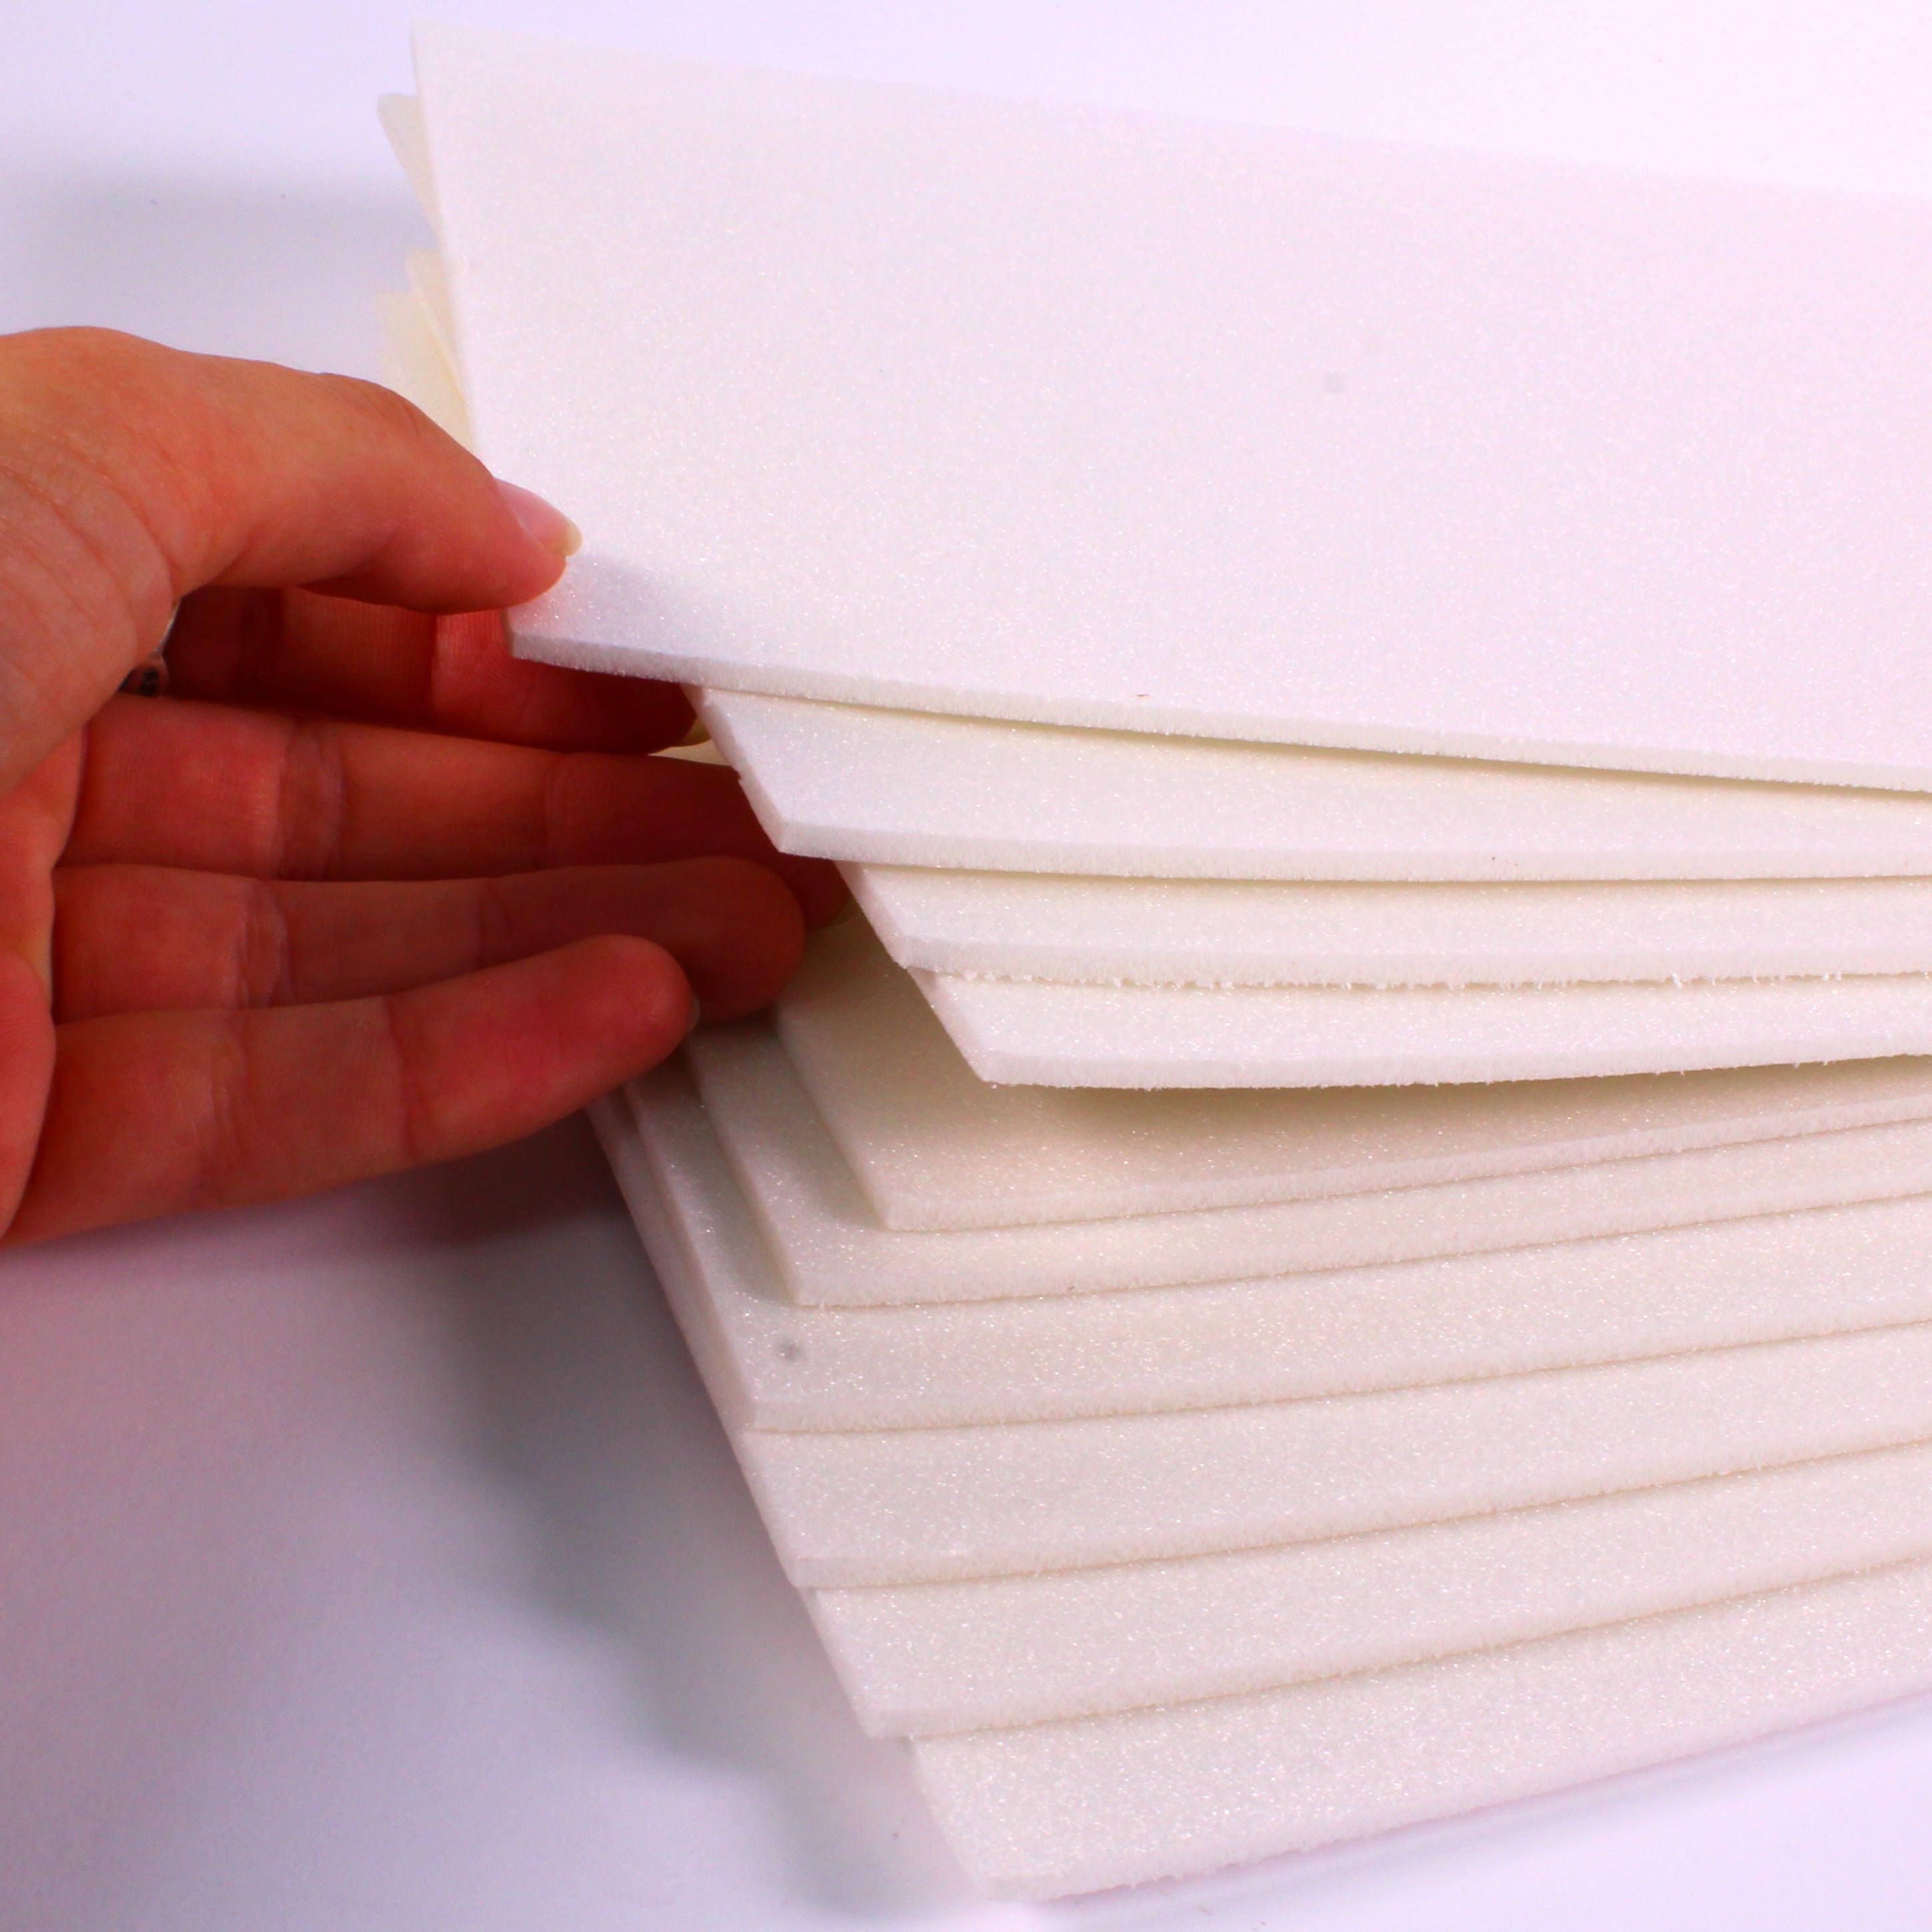 Safeprint White Foam Sheets Art Printing Alternative to Lino Block